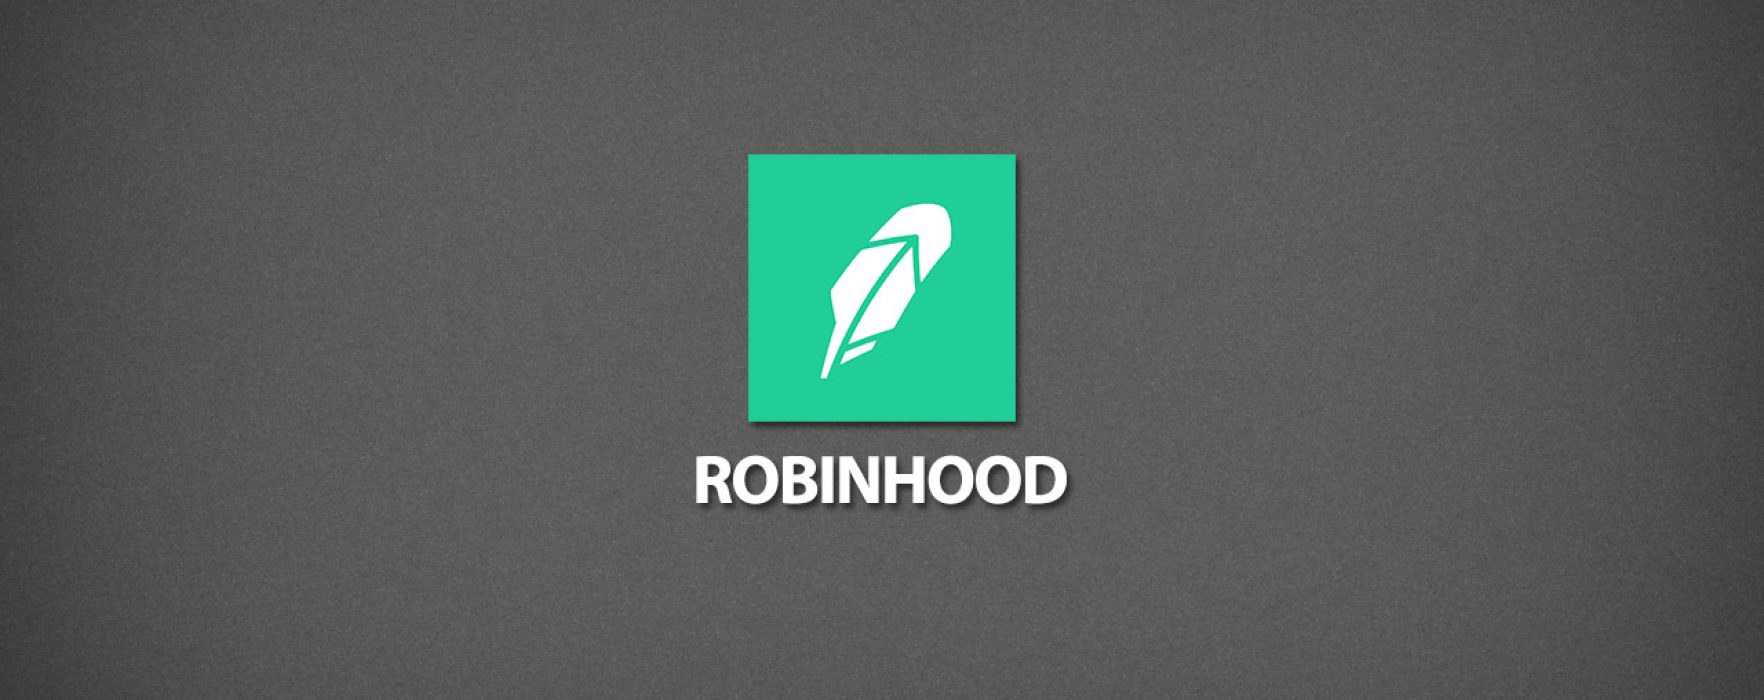 Robinhood将技术团队人数增加一倍-第1张图片